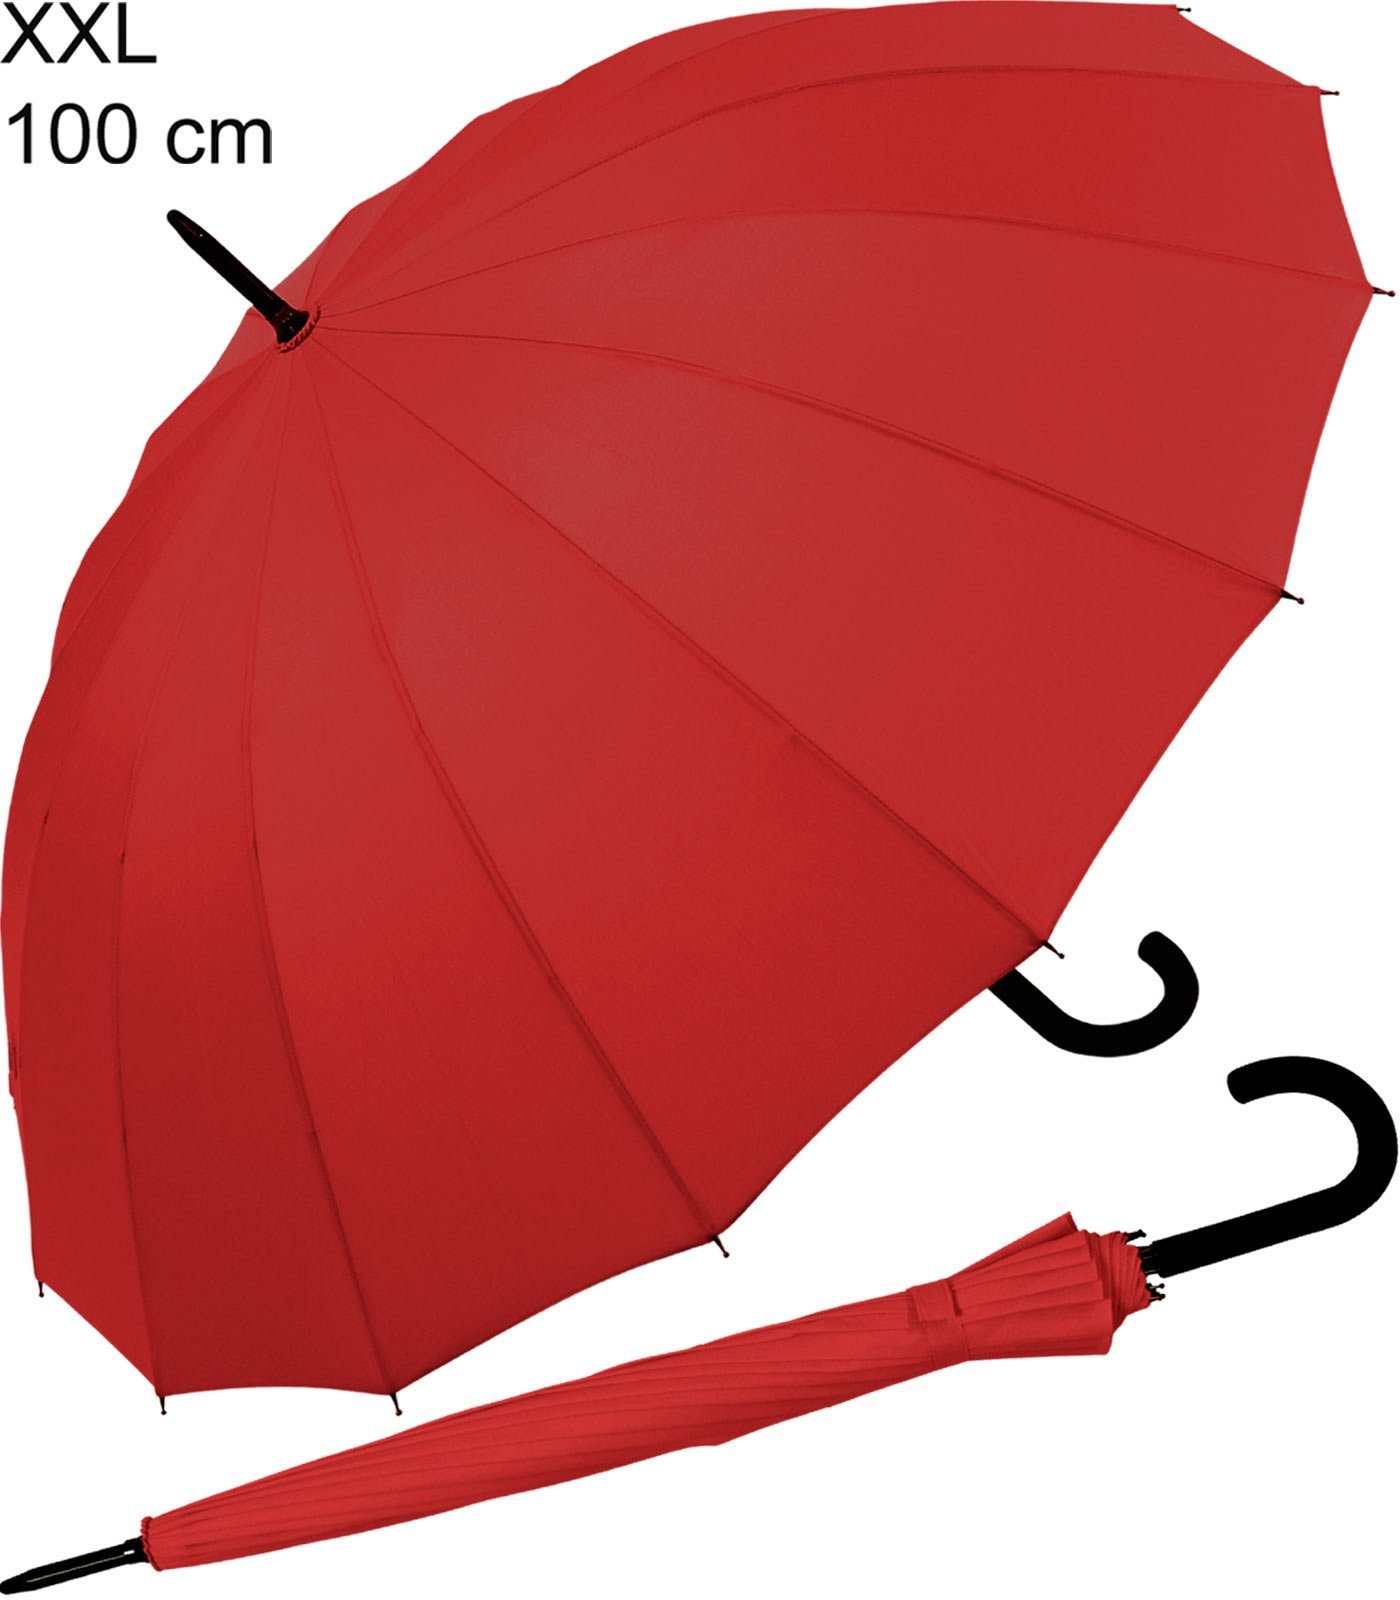 sturmfest, Fiberglas iX-brella farbenfroh Automatik Schirm 16-teiliger Langregenschirm